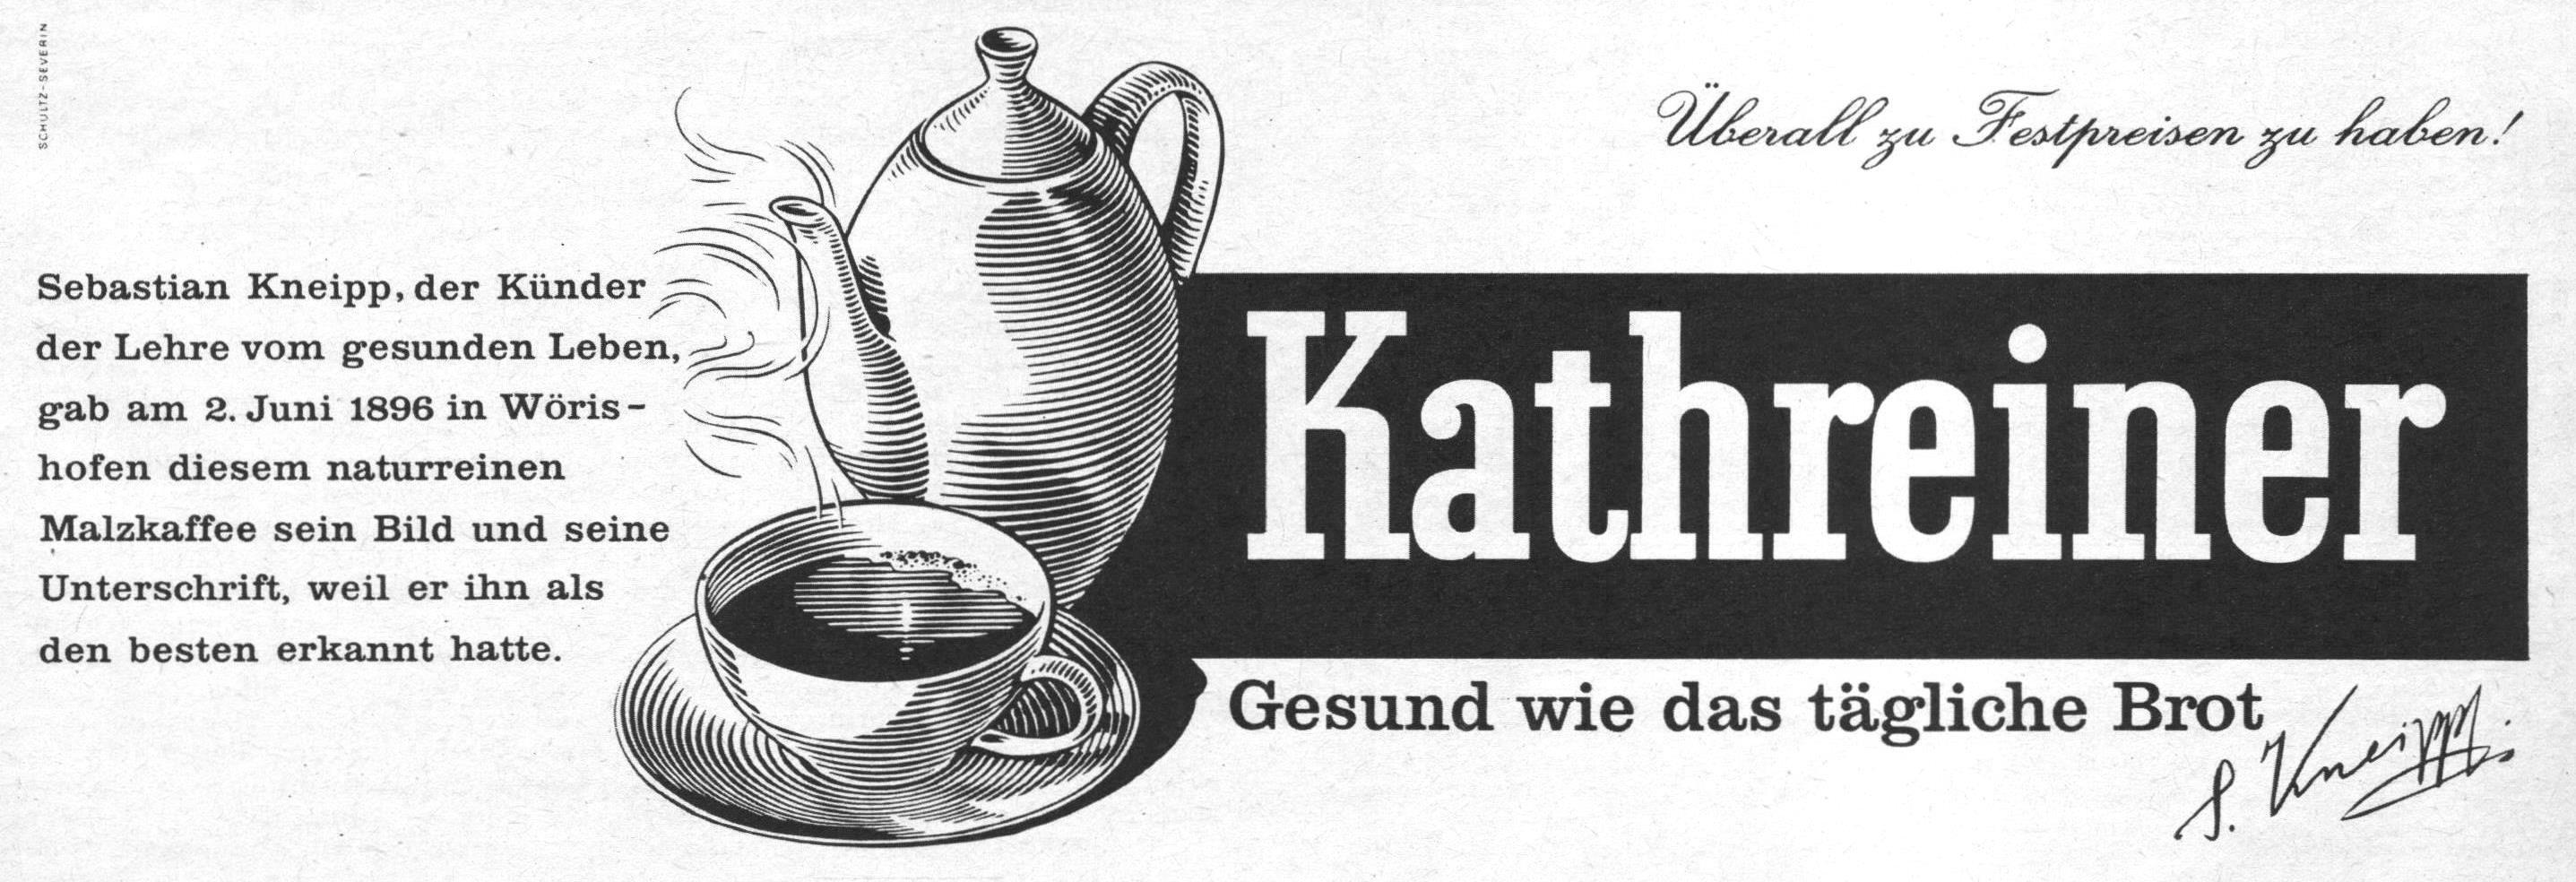 Kathreiner 1963 01.jpg